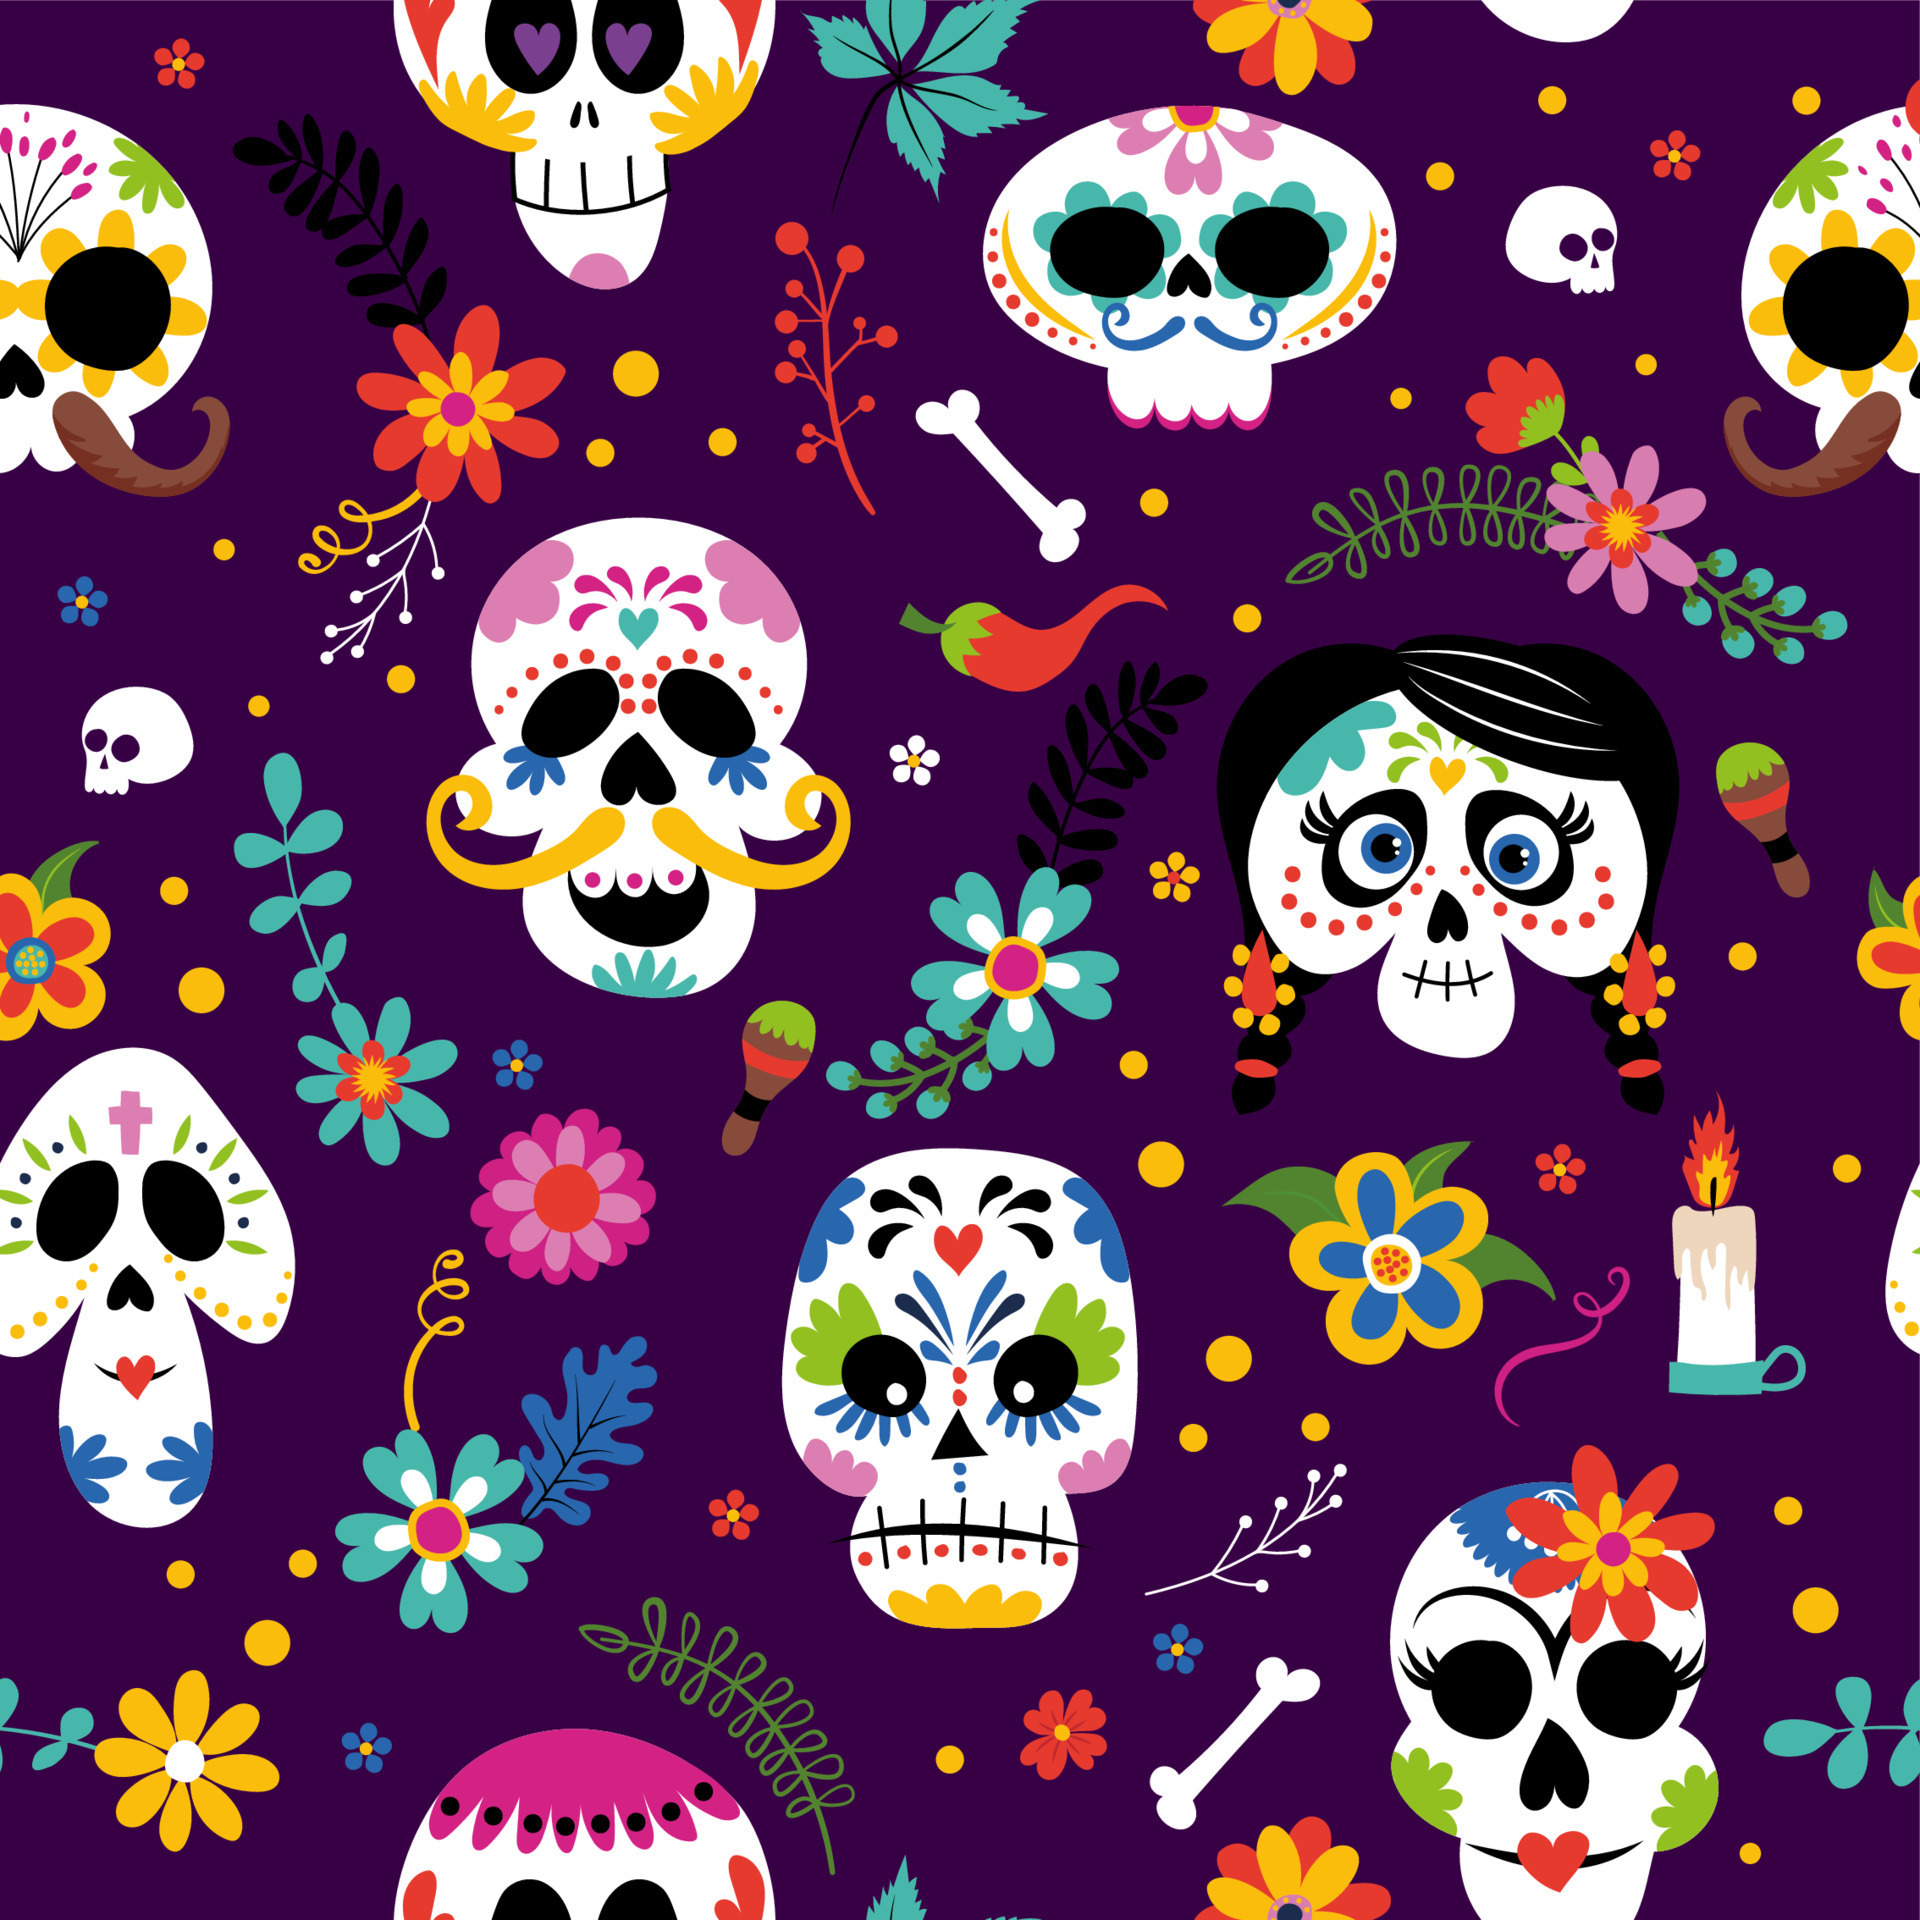 Dia de los muertos wallpaper by Gemini90mex  Download on ZEDGE  cb8f